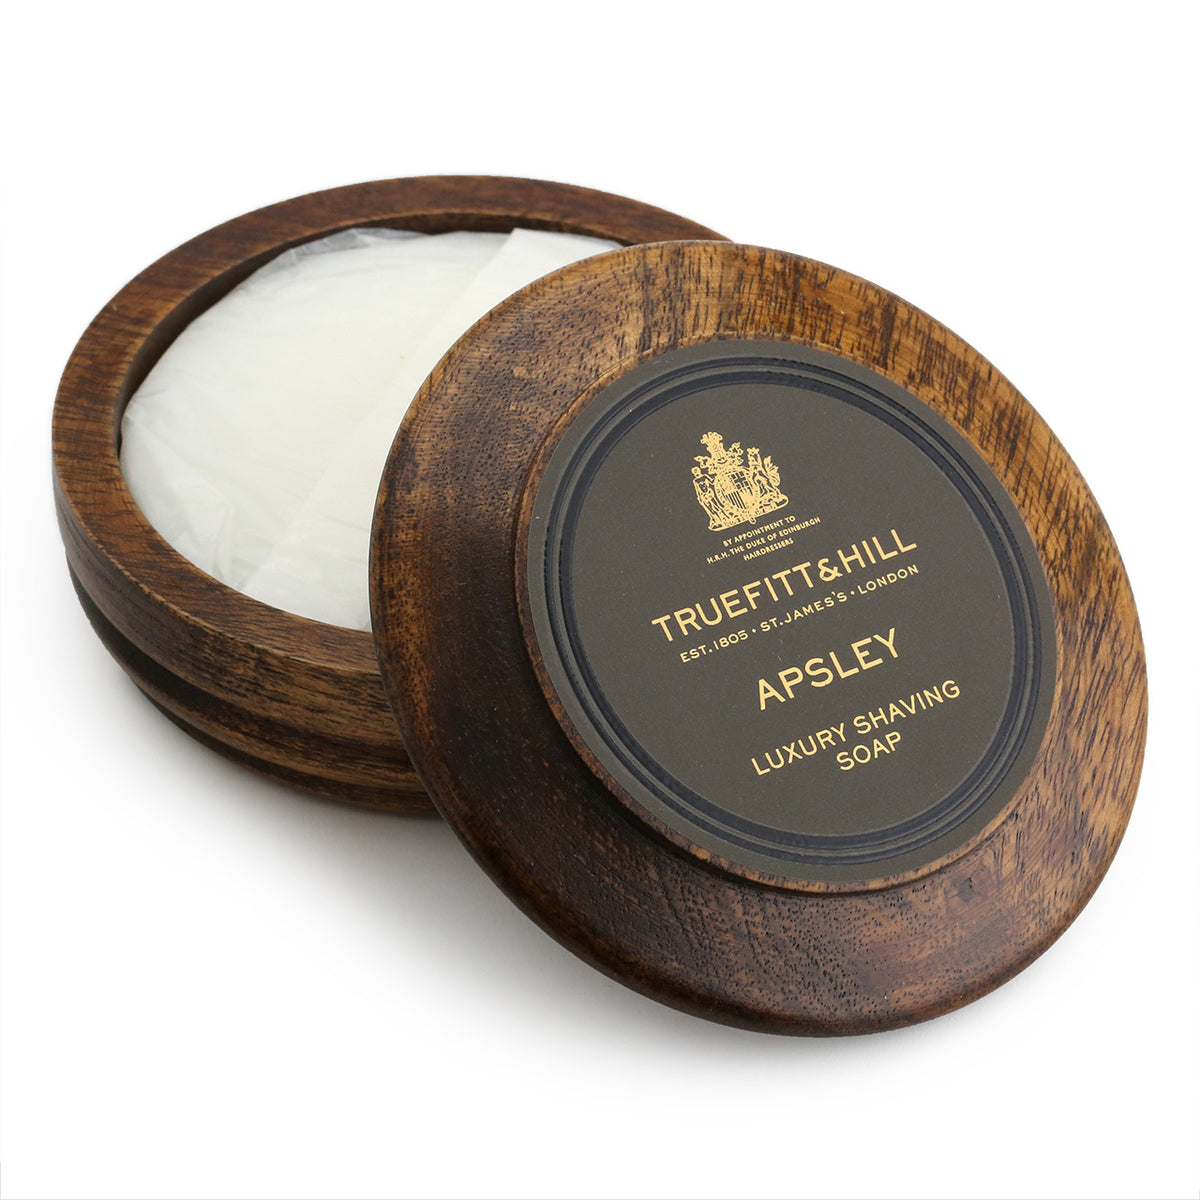 Truefitt &amp; Hill Shaving Soap in a wooden bowl, Apsley scent.